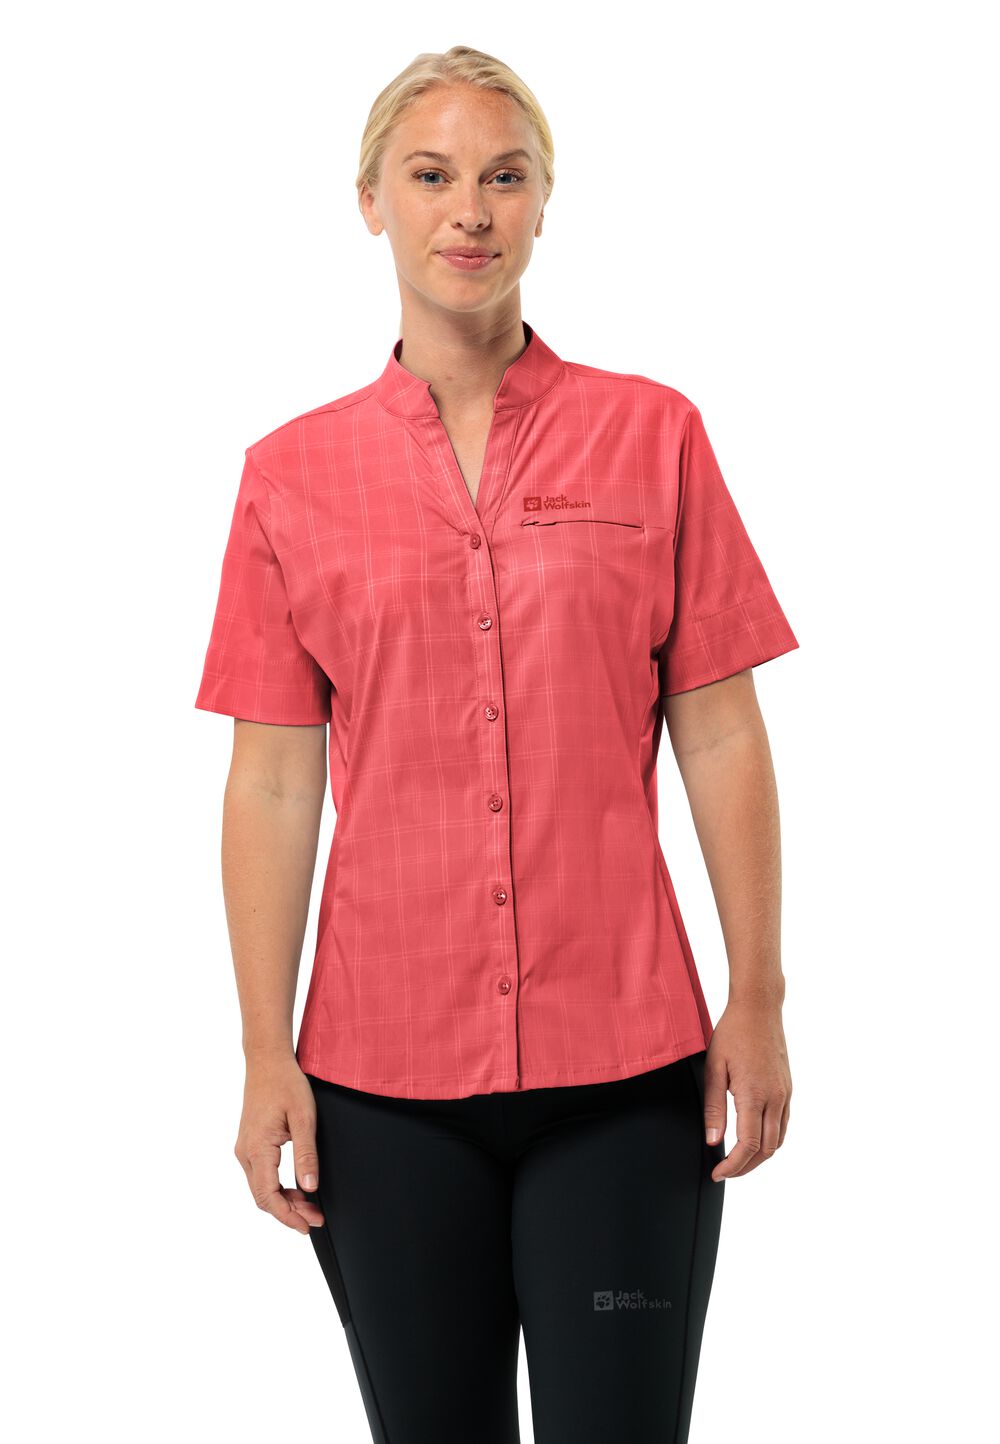 Jack Wolfskin Norbo S S Shirt Women Wandelblouse met korte mouwen Dames M rood vibrant red check